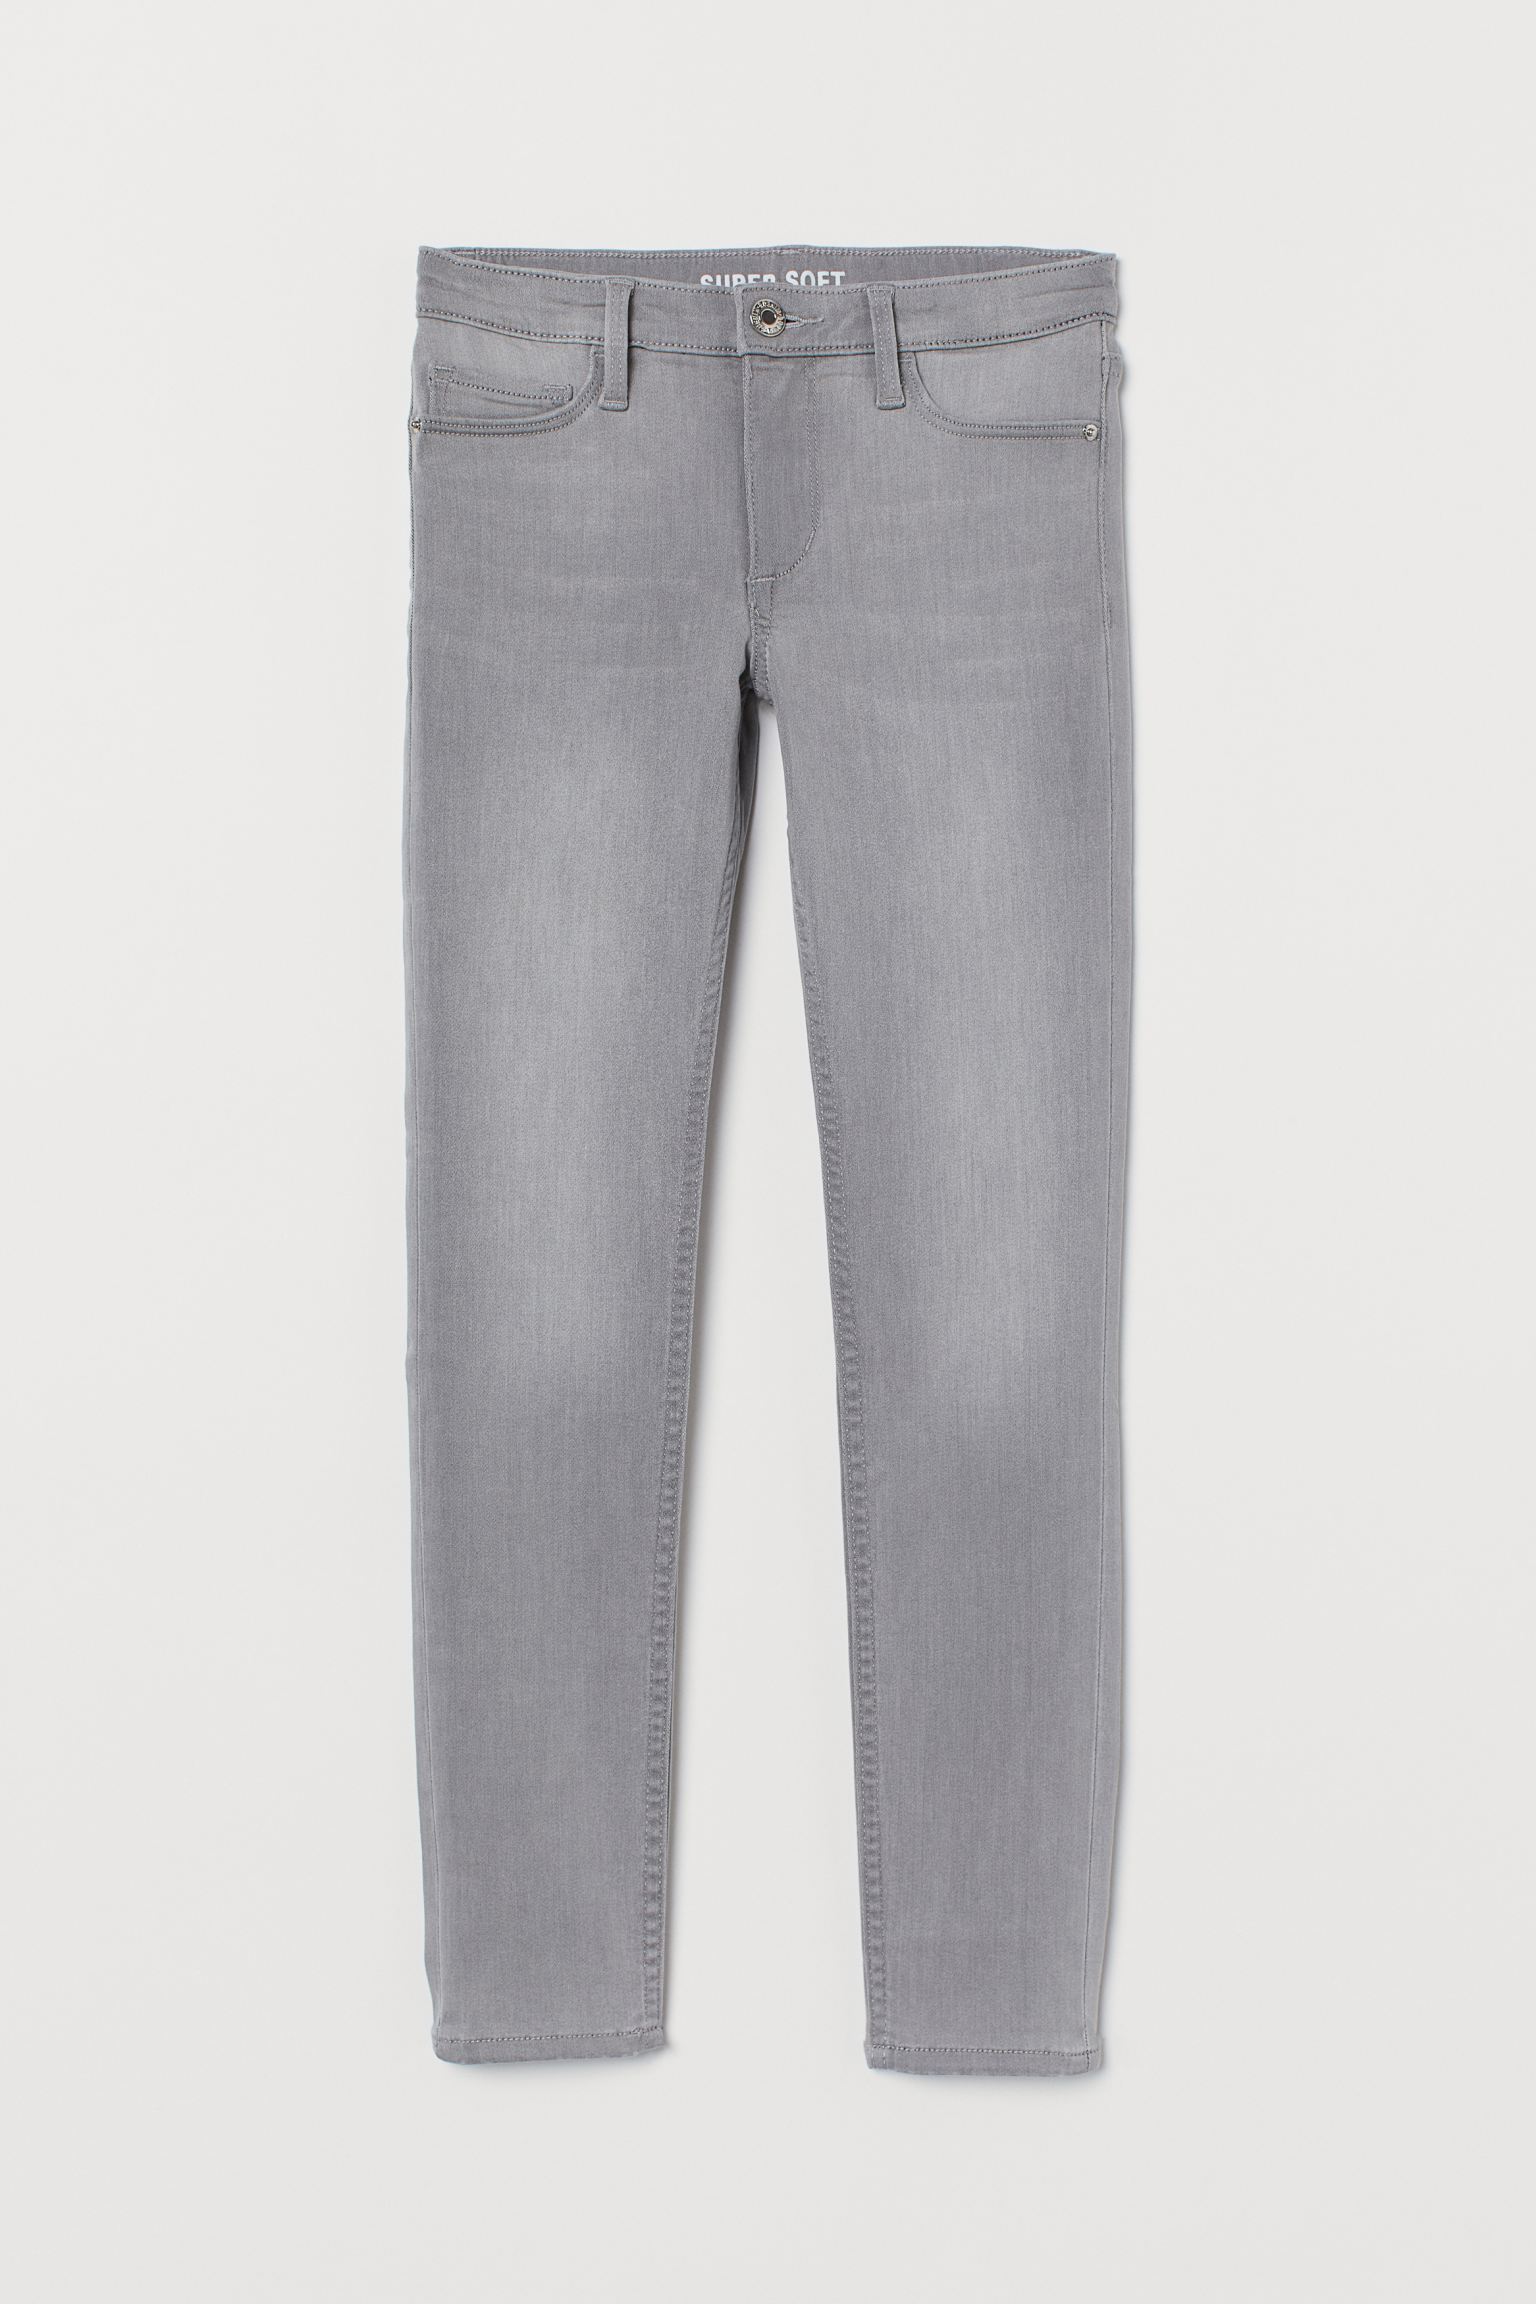 شلوار جینز 30902 سایز 8 تا 14 سال مارک H&M   *